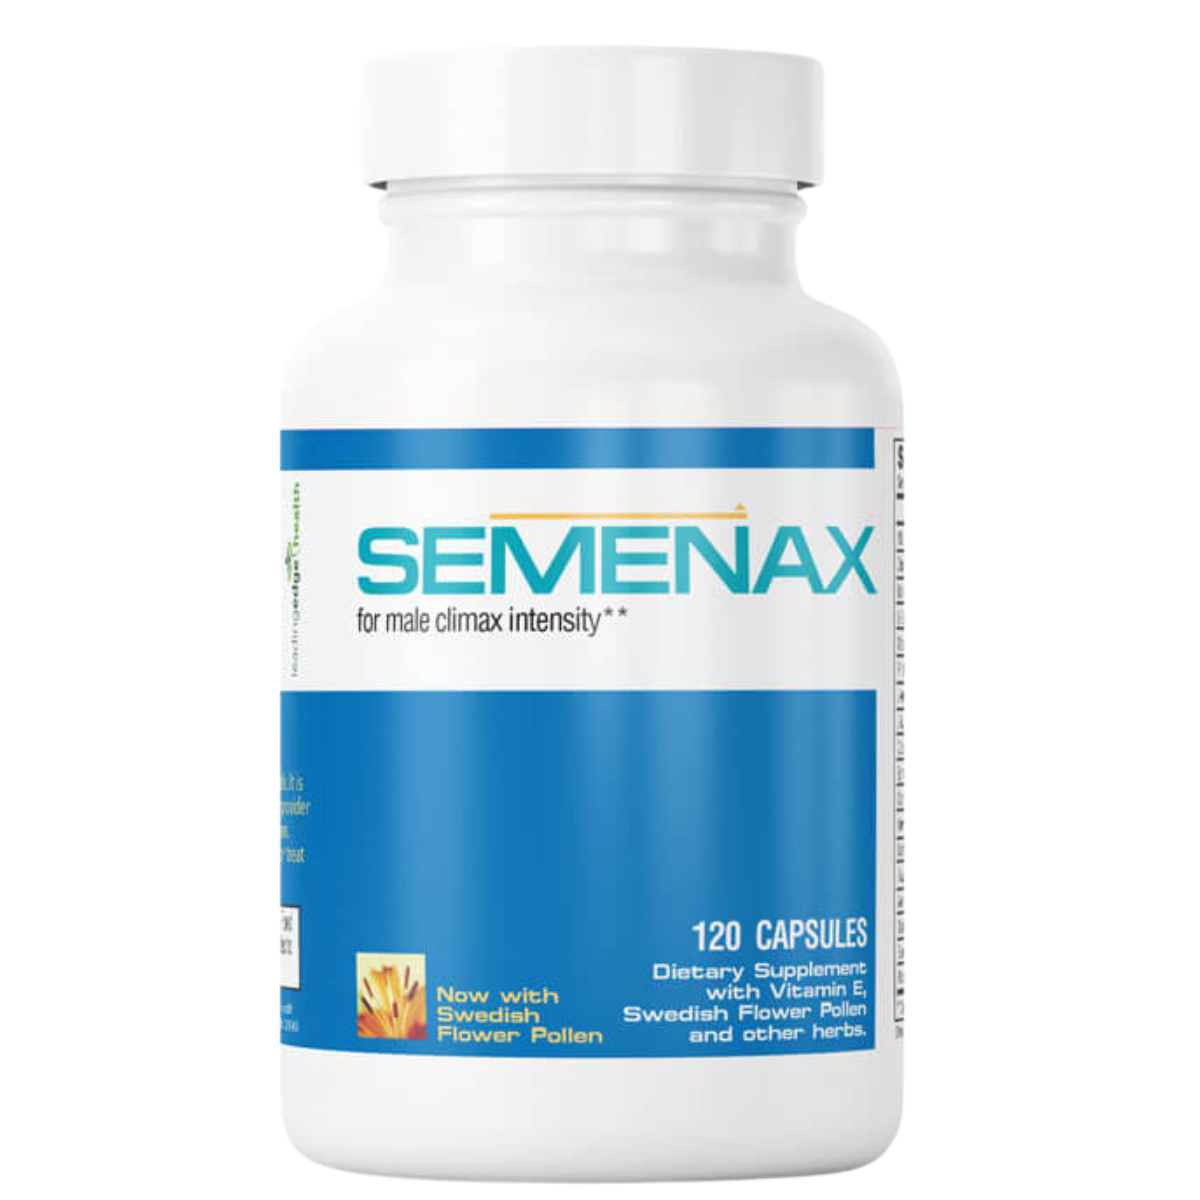 Semenax - Enhance Male Vitality & Semen Volume Naturally